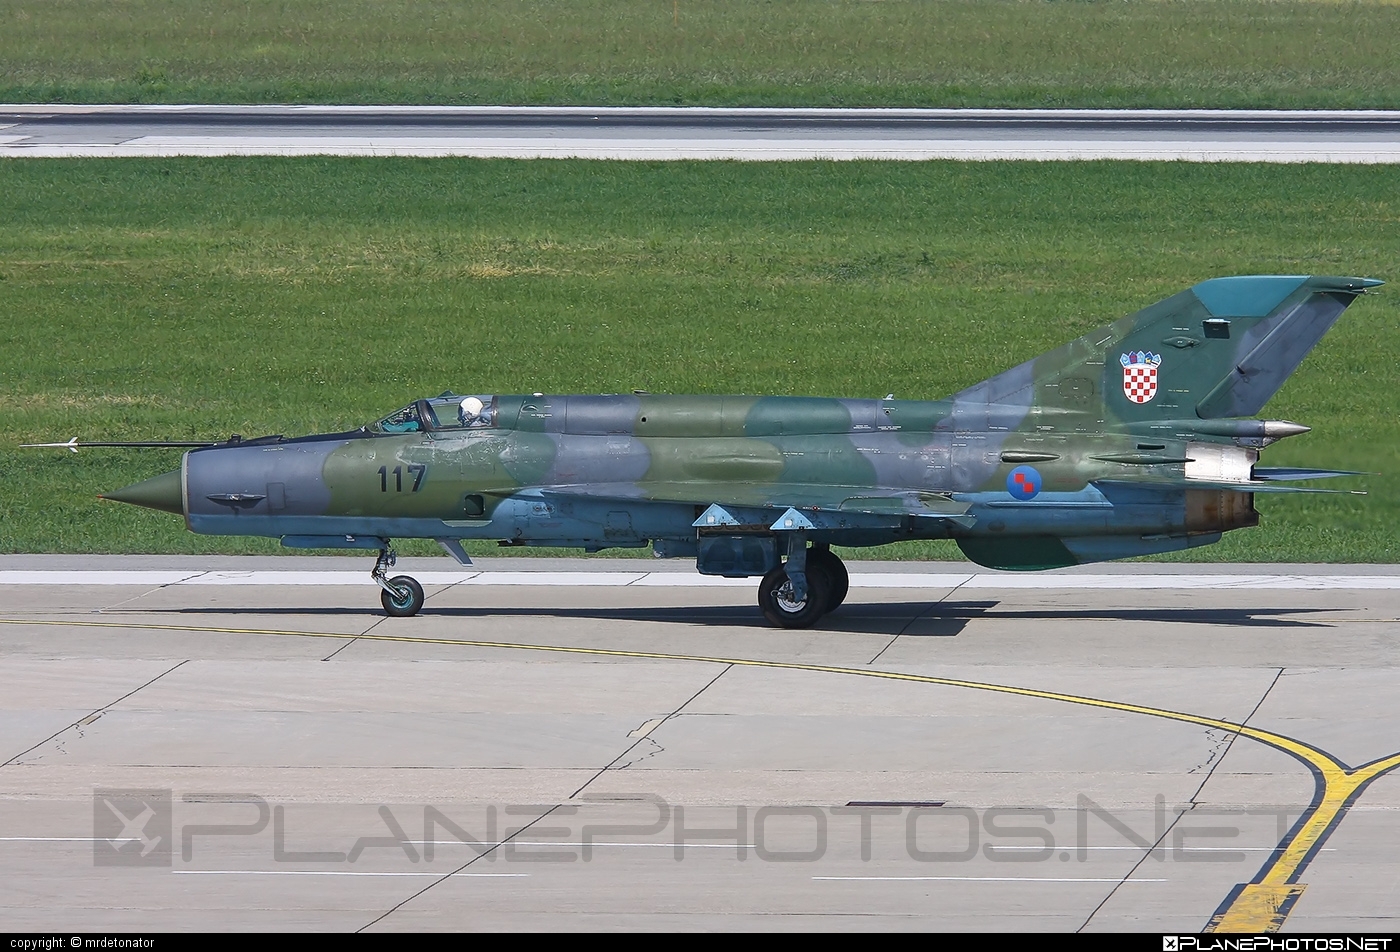 Mikoyan-Gurevich MiG-21bis-D - 117 operated by Hrvatsko ratno zrakoplovstvo i protuzračna obrana (Croatian Air Force) #CroatianAirForce #HrvatskoRatnoZrakoplovstvoIProtuzracnaObrana #mig #mig21 #mig21bisd #mikoyangurevich